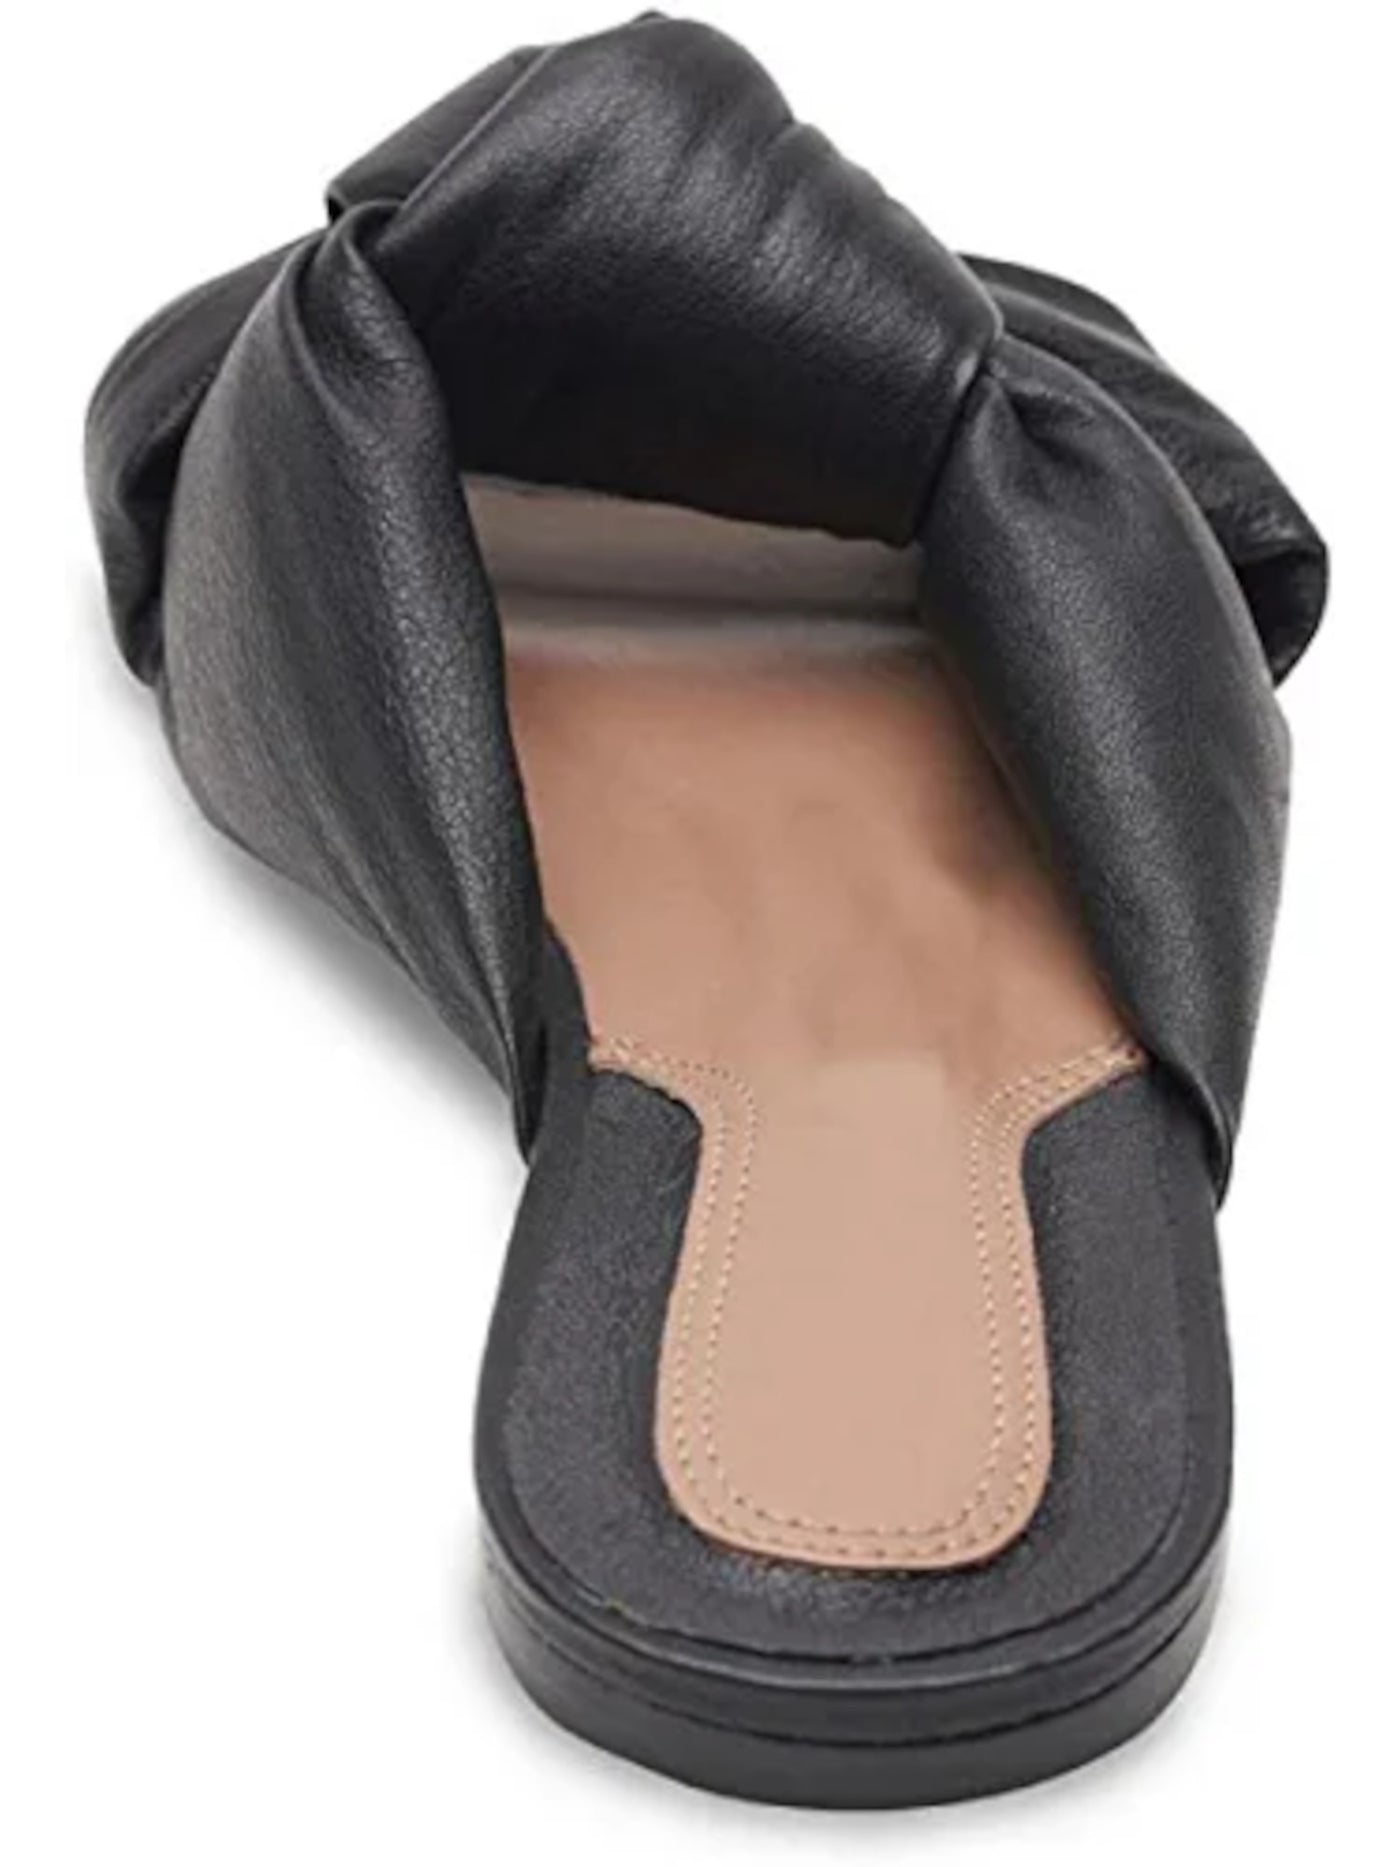 BCBG MAXAZRIA Womens Black Bow Accent Tinsley Round Toe Slip On Slide Sandals Shoes 5.5 M